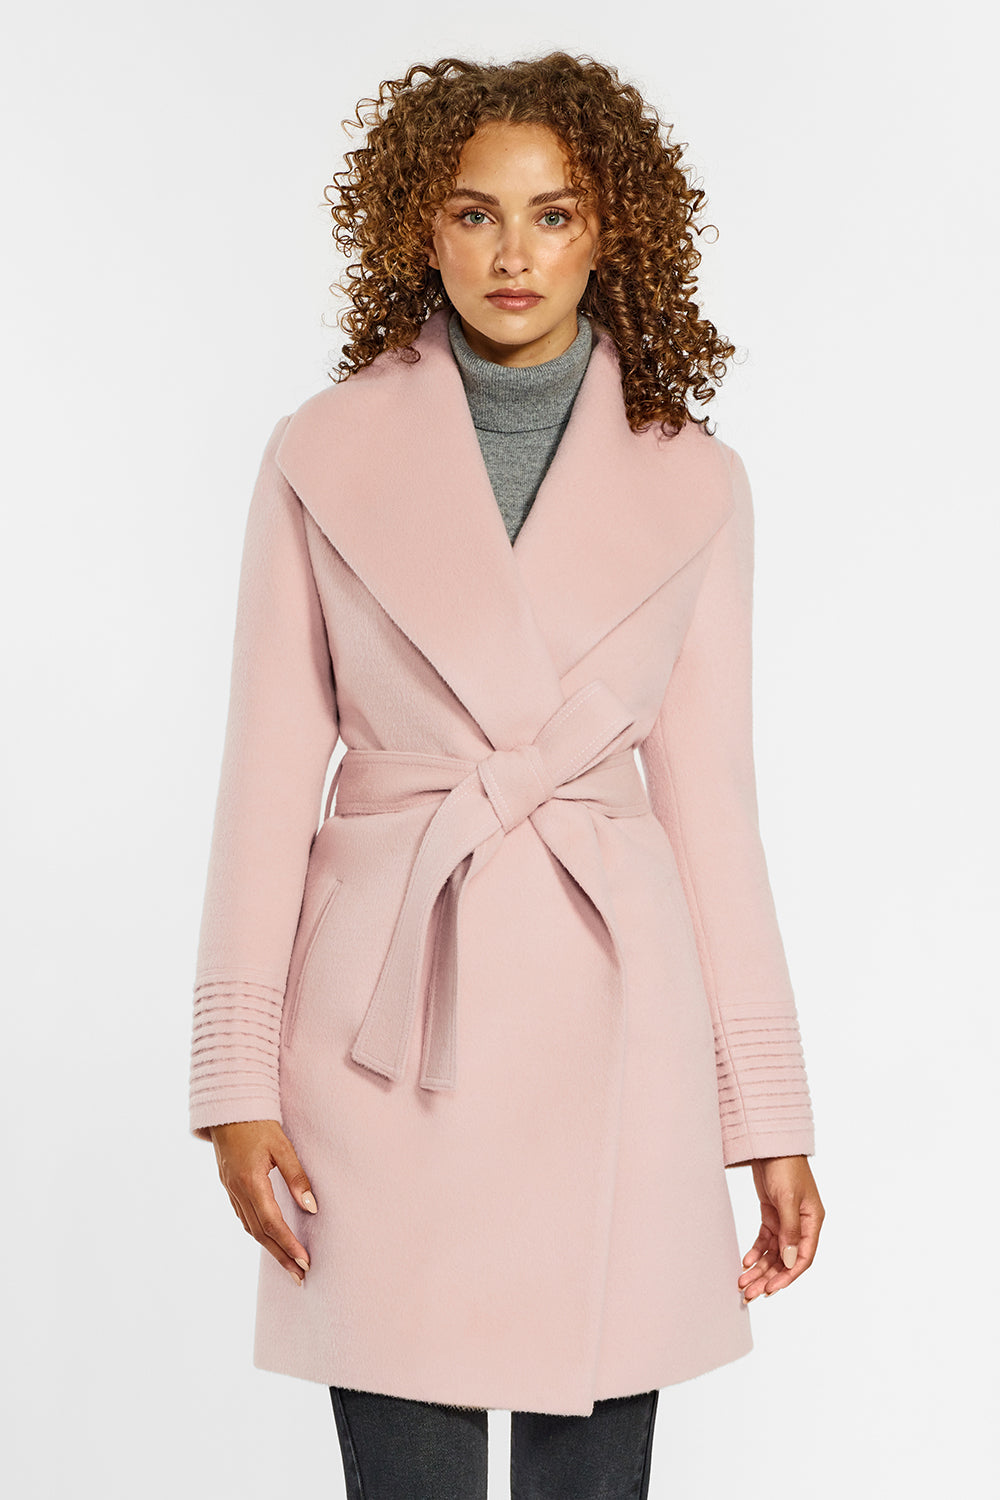 Glamorous Bright Pink Marl Midi Coat with Lapel Collar - Glamorous